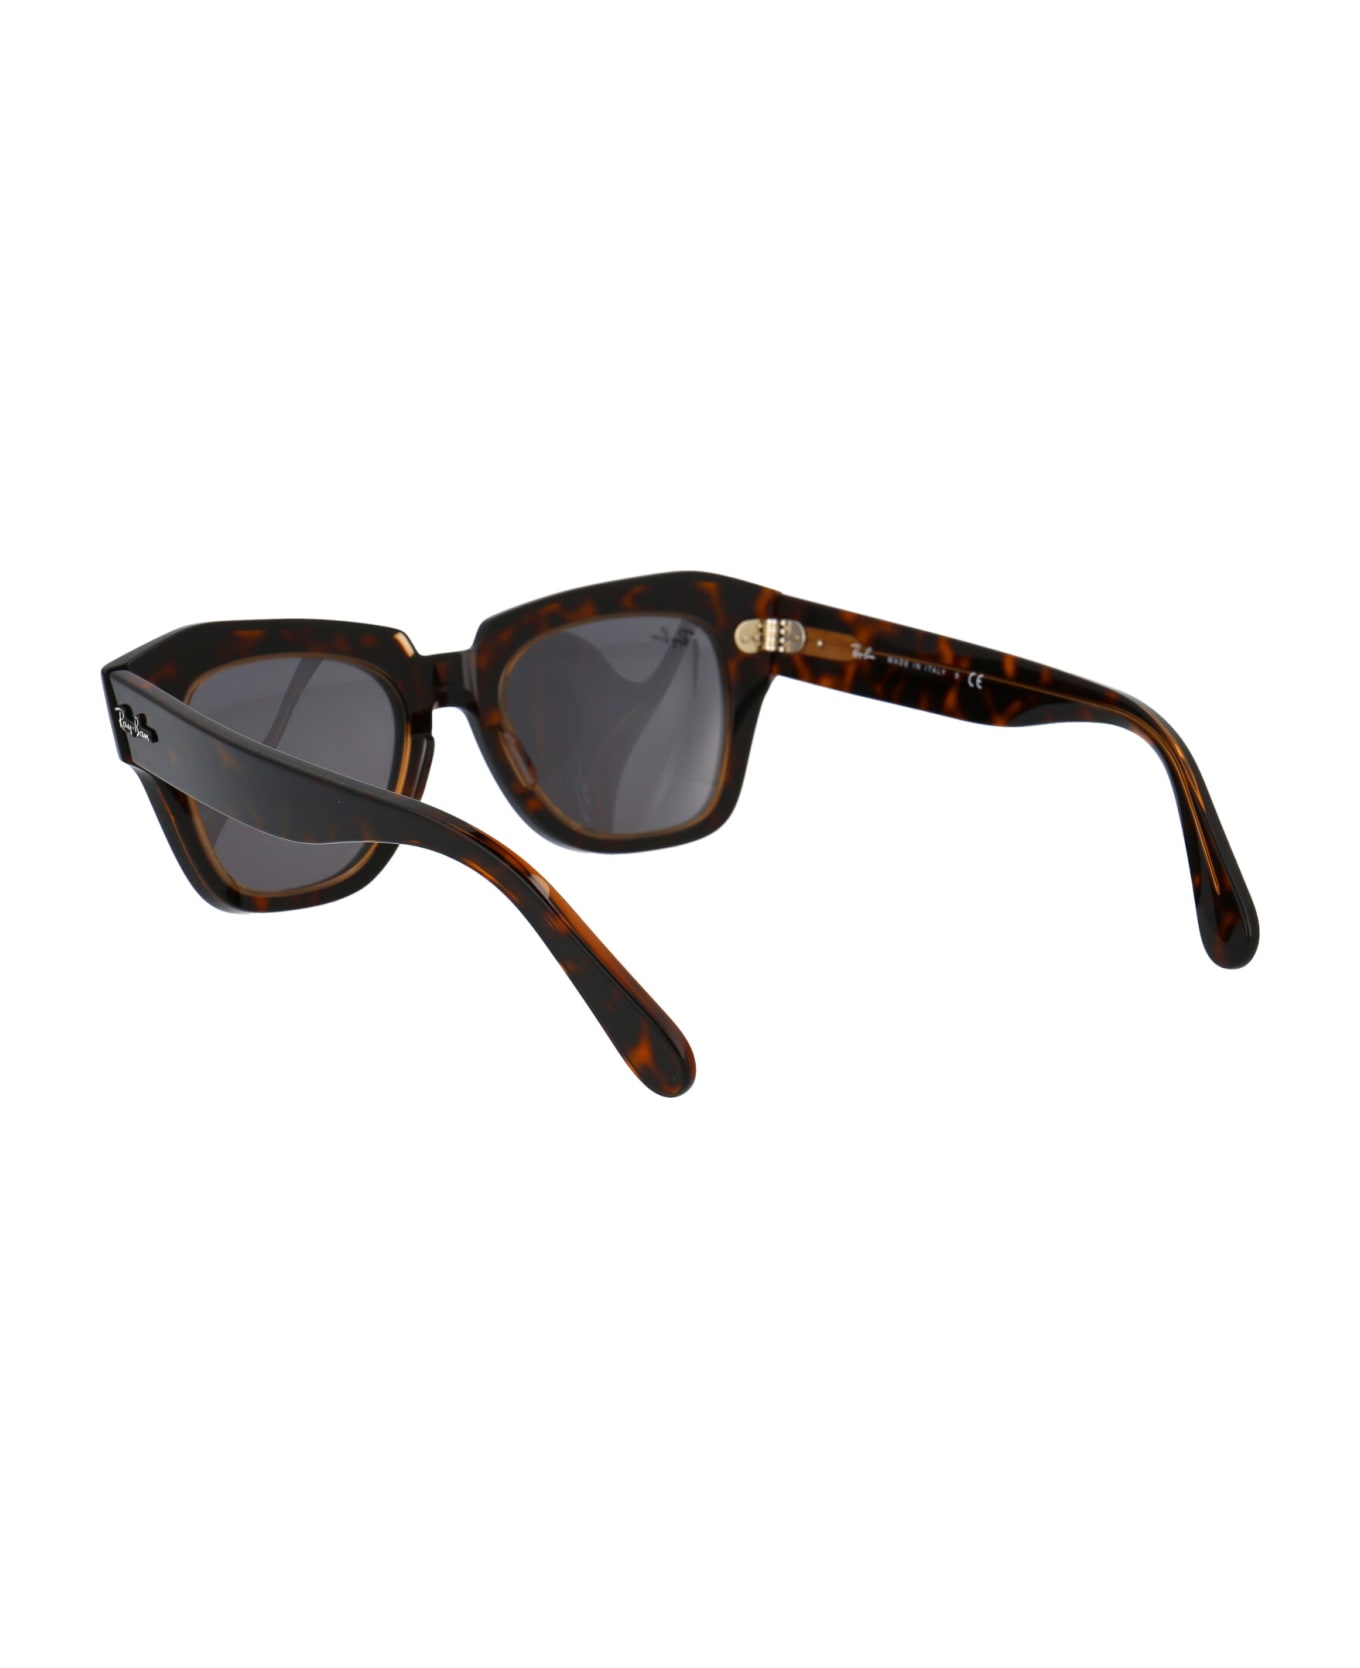 Ray-Ban State Street Sunglasses - 1292B1 HAVANA ON TRANSPARENT BROWN サングラス